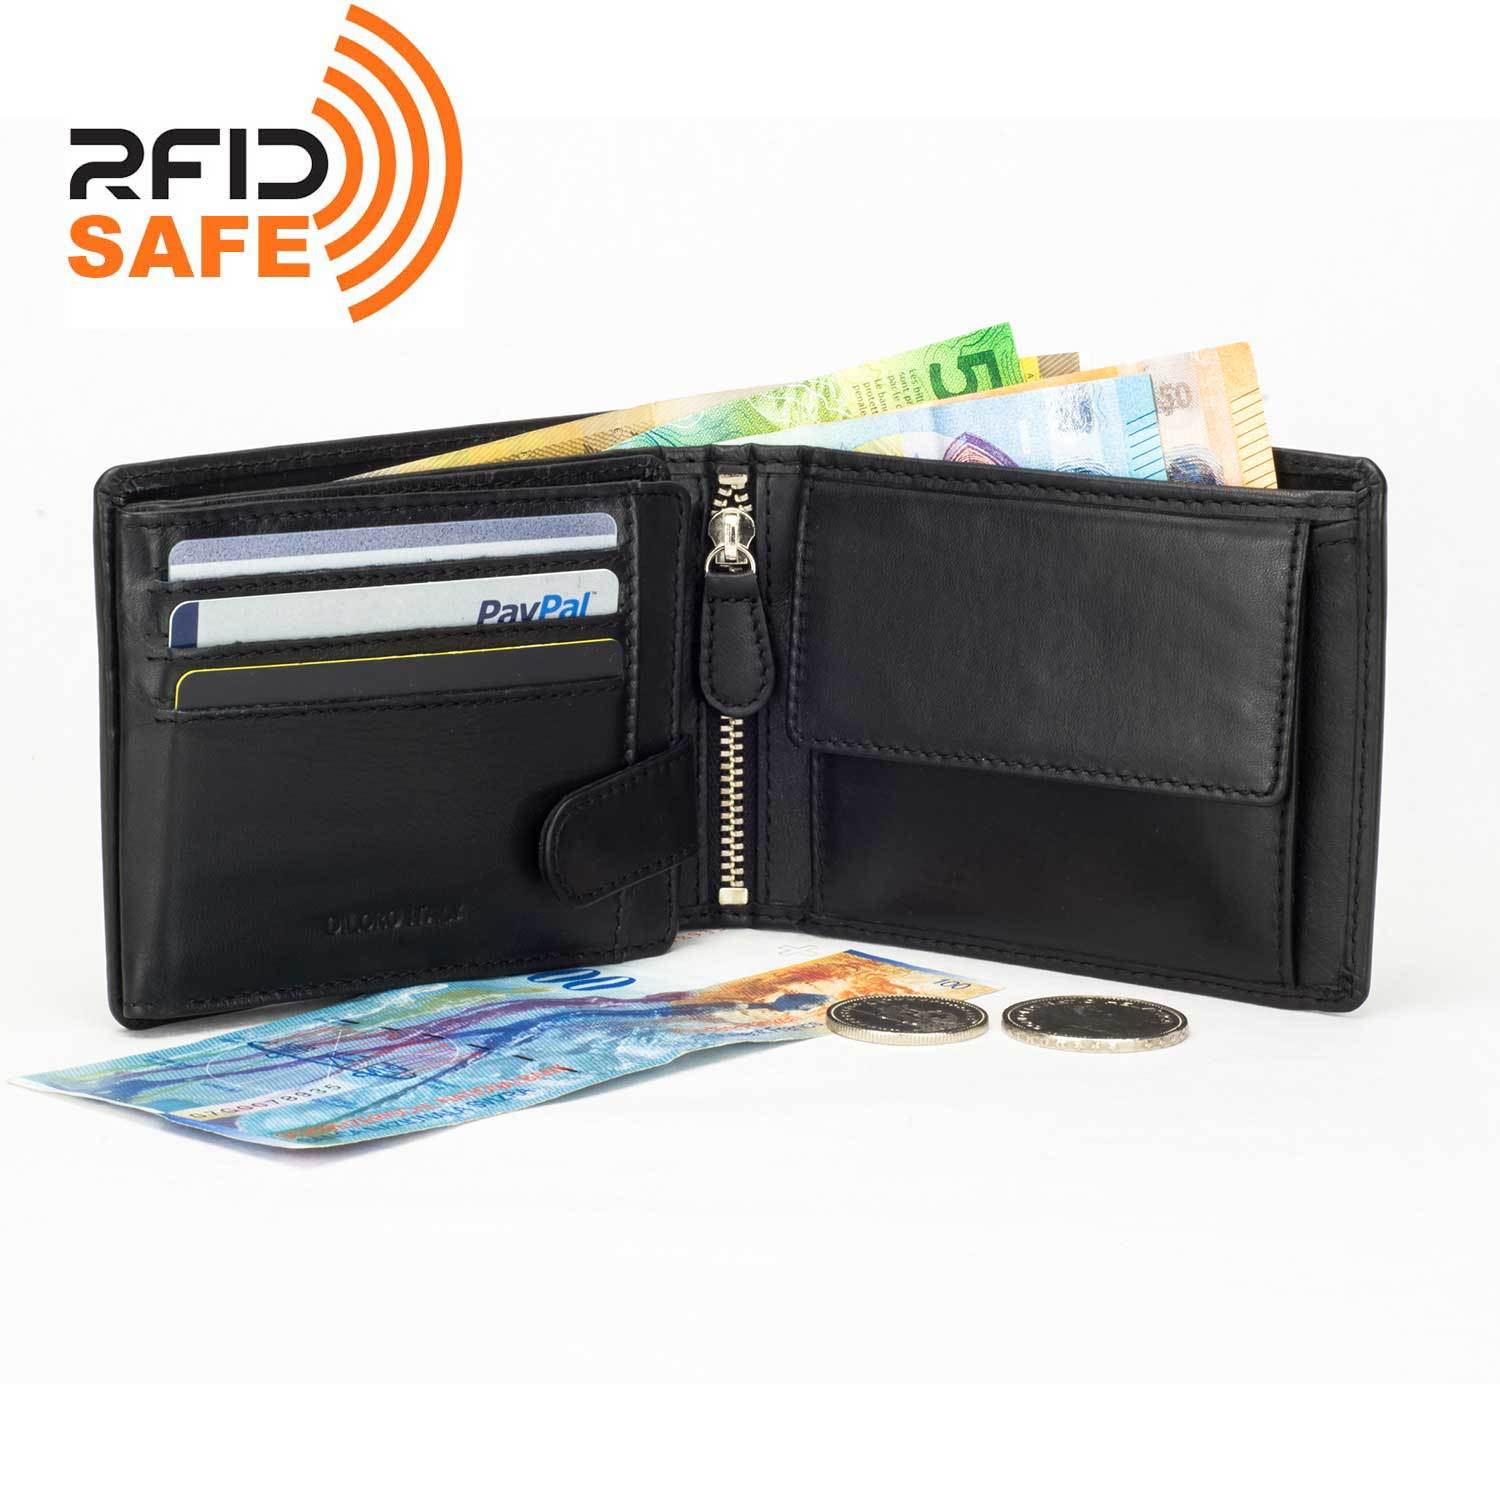 Are RFID-Blocking Wallets Worth It?